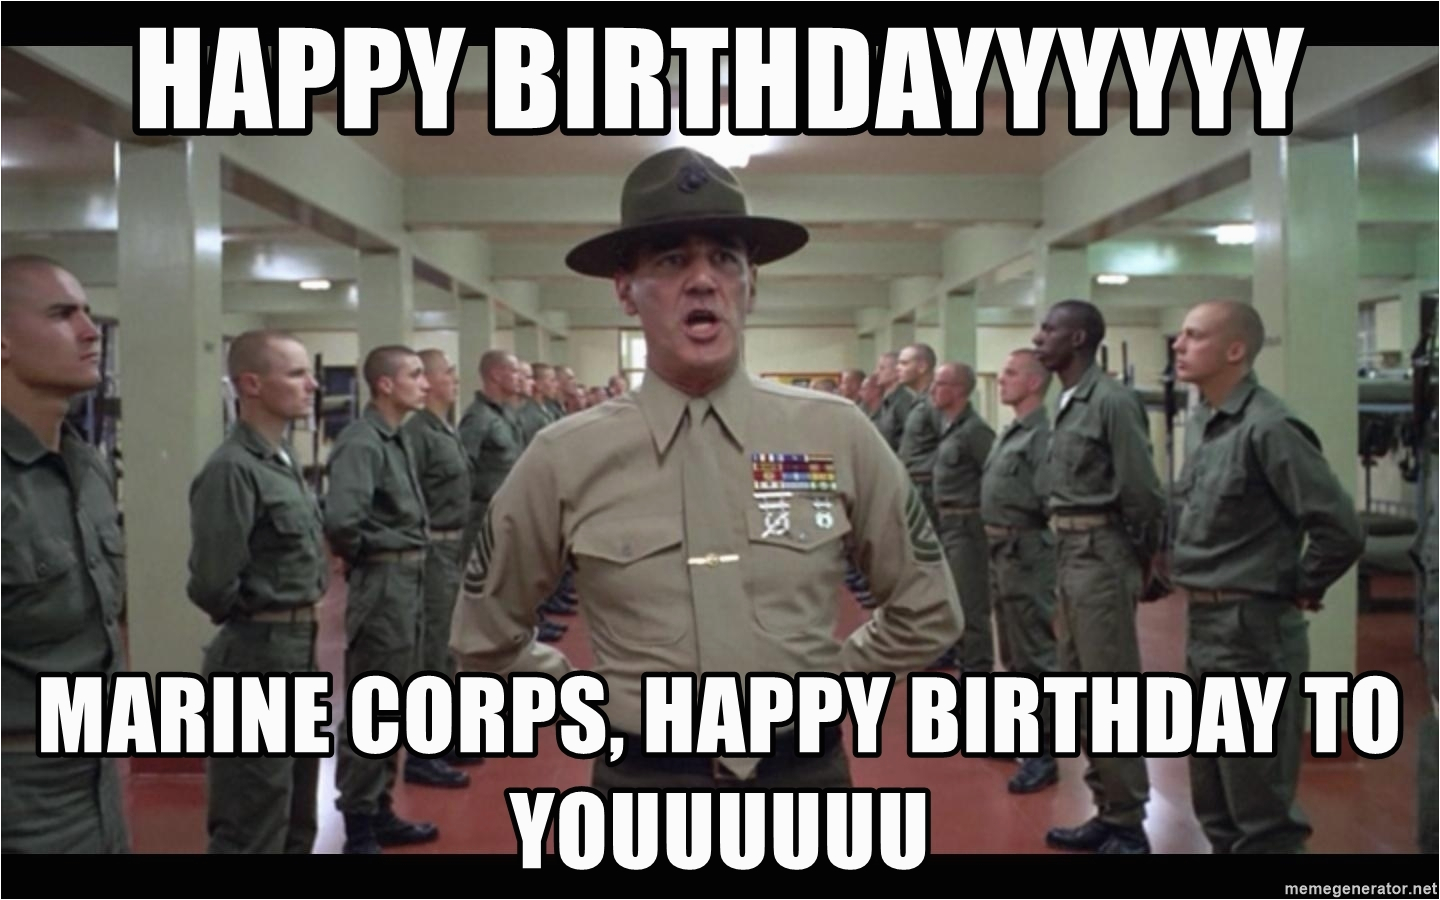 r lee ermey2 happy birthdayyyyyy marine corps happy birthday to youuuuuu